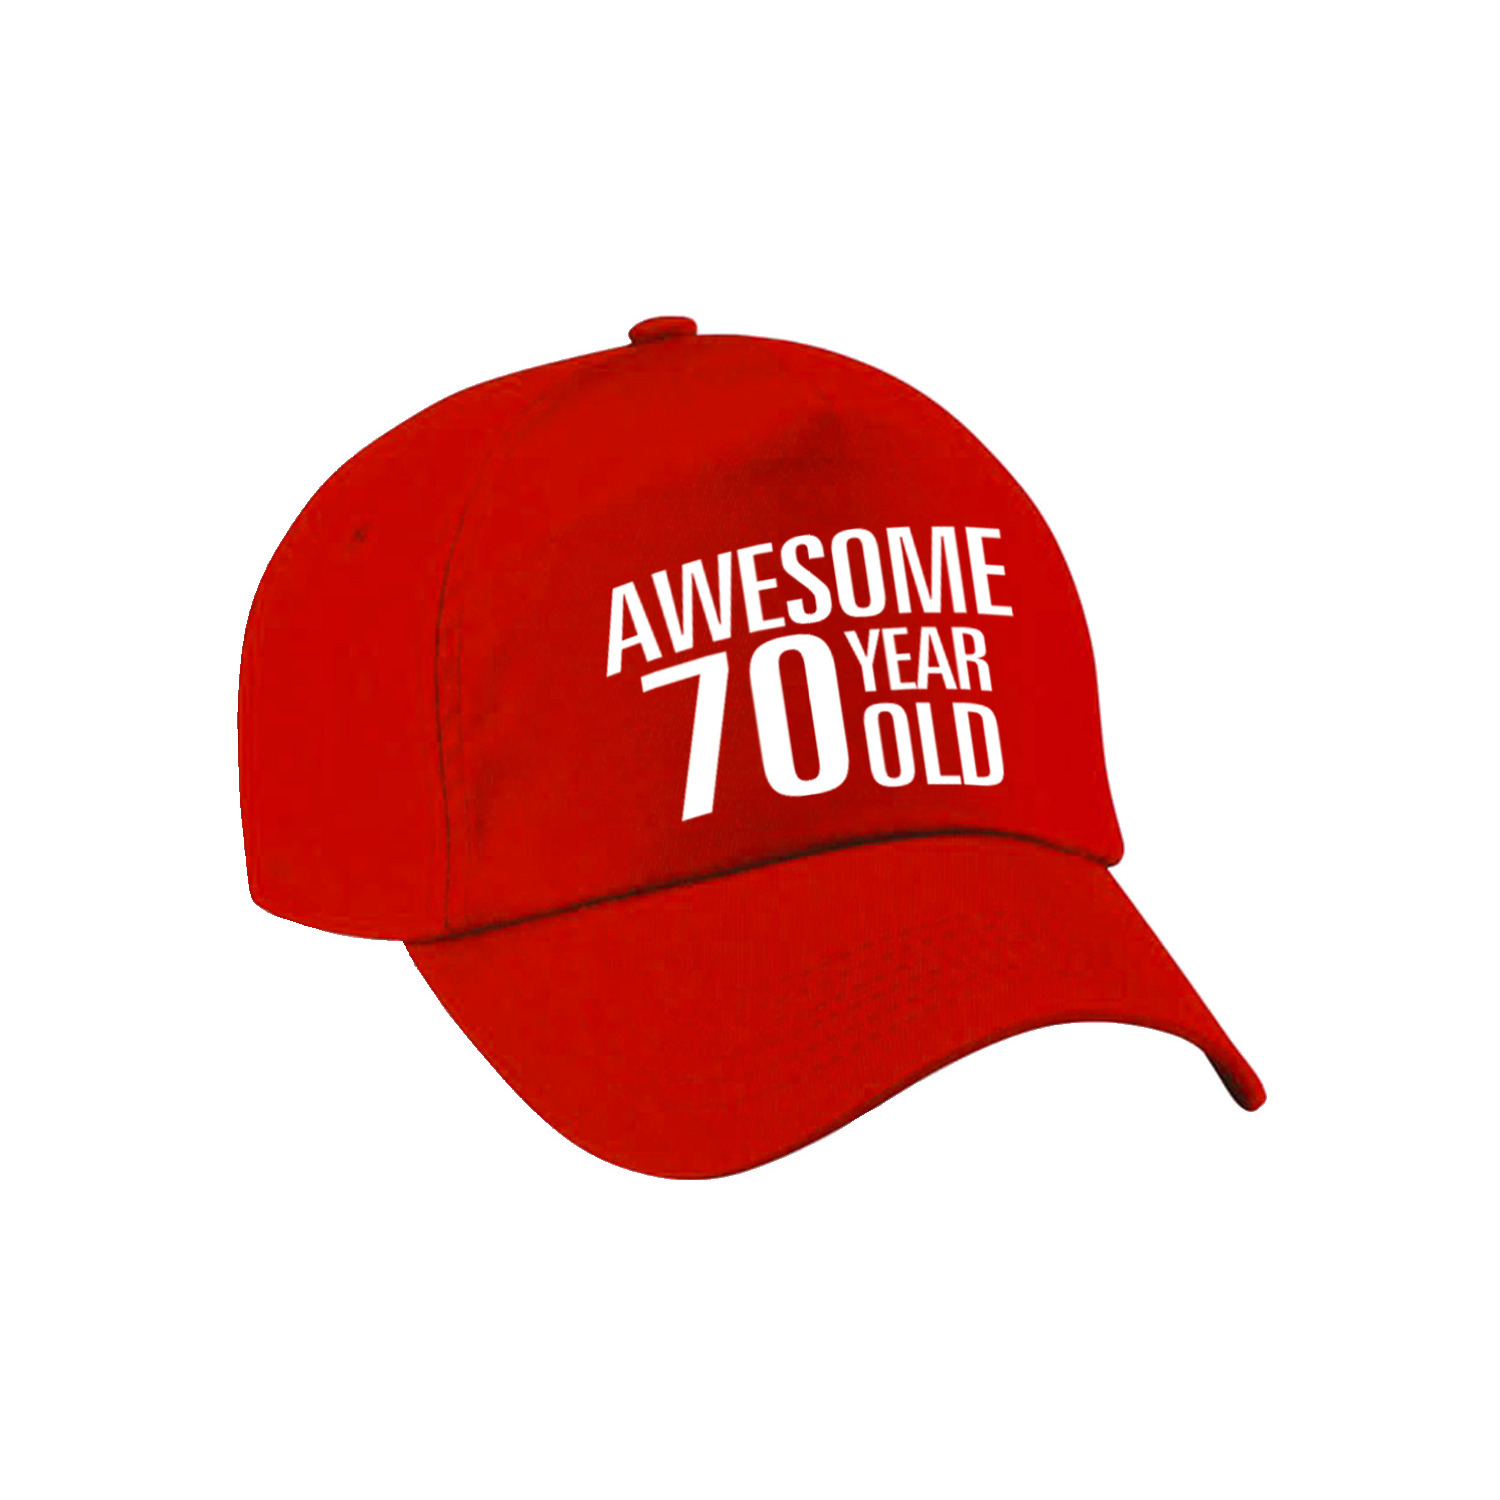 Awesome 70 year old verjaardag pet-cap rood voor dames en heren